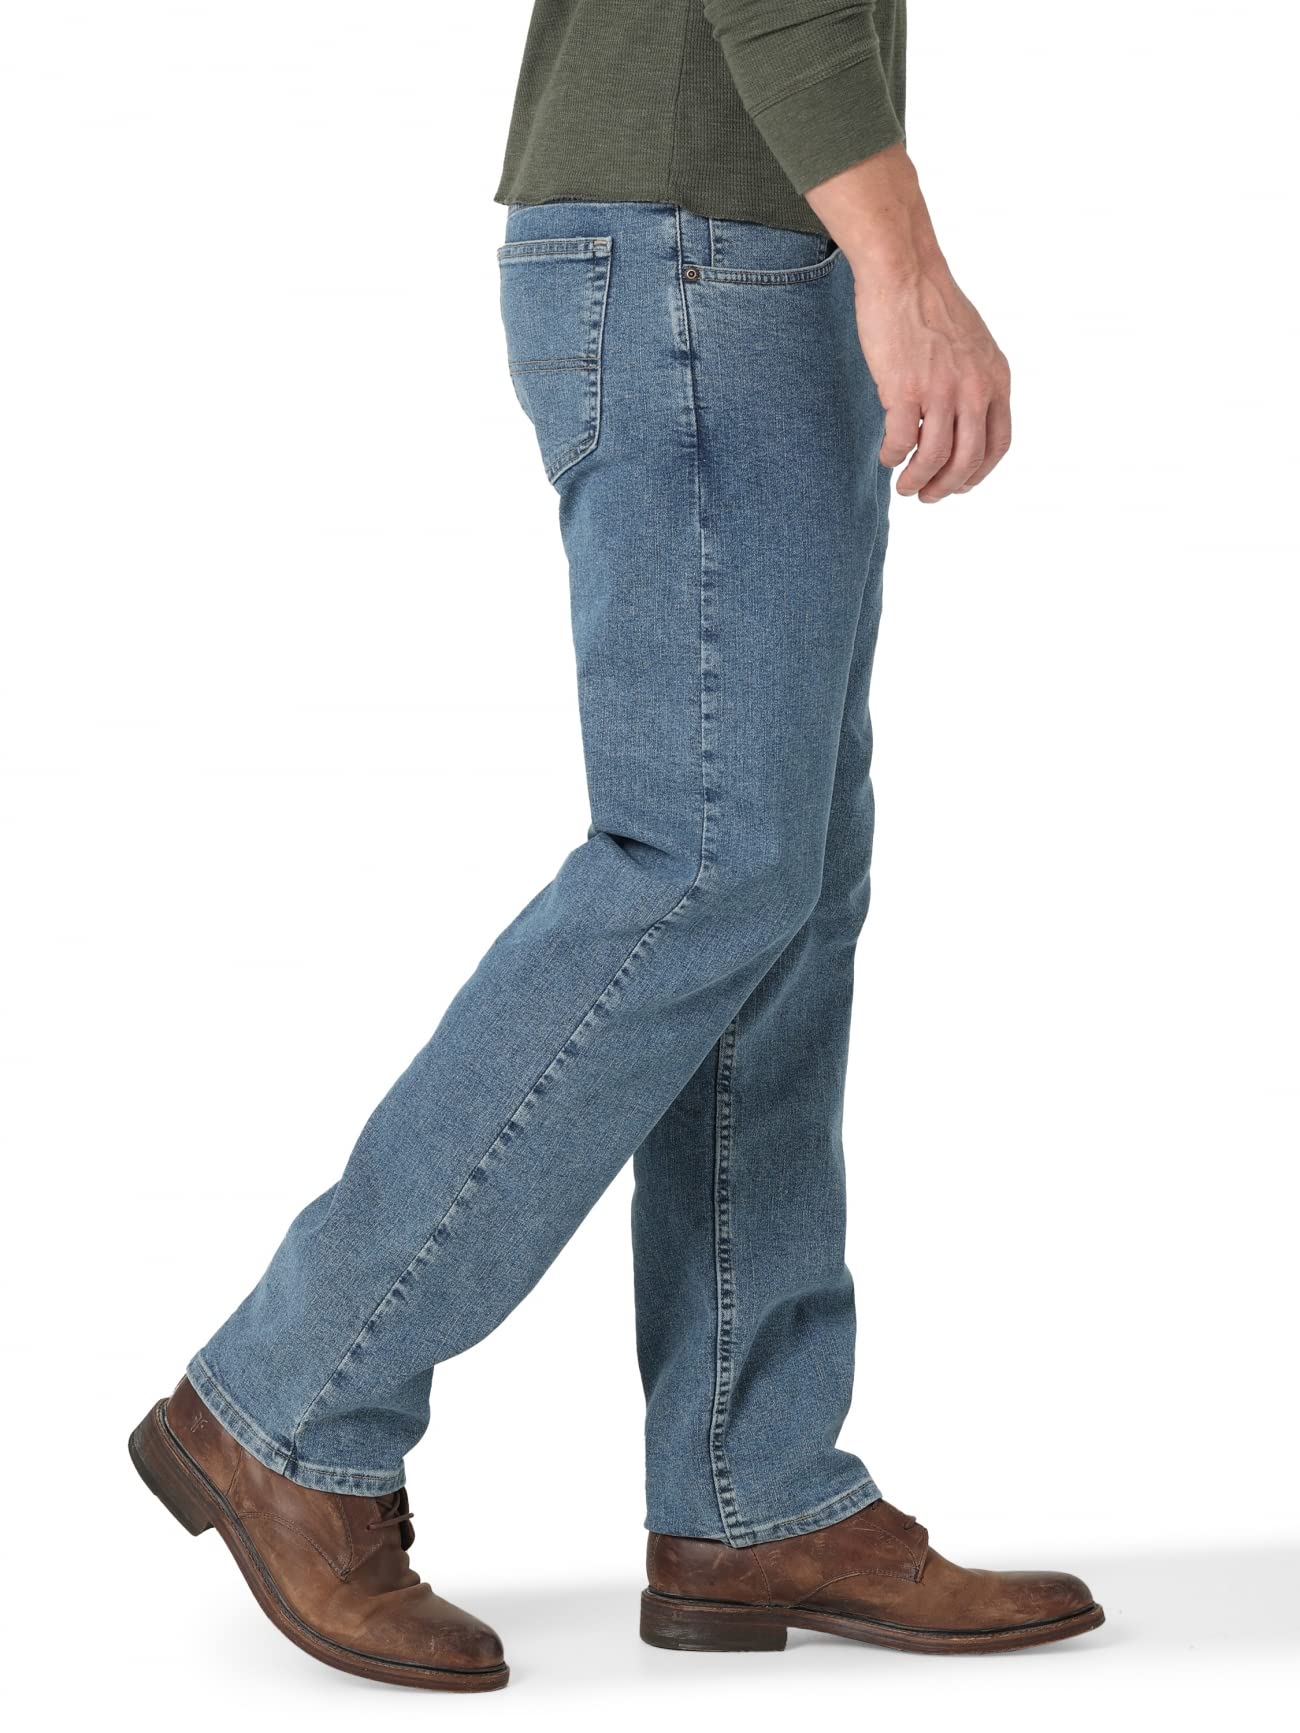 Wrangler Authentics Men's Regular Fit Comfort Flex Waist Jean, Light Stonewash, 31W x 30L